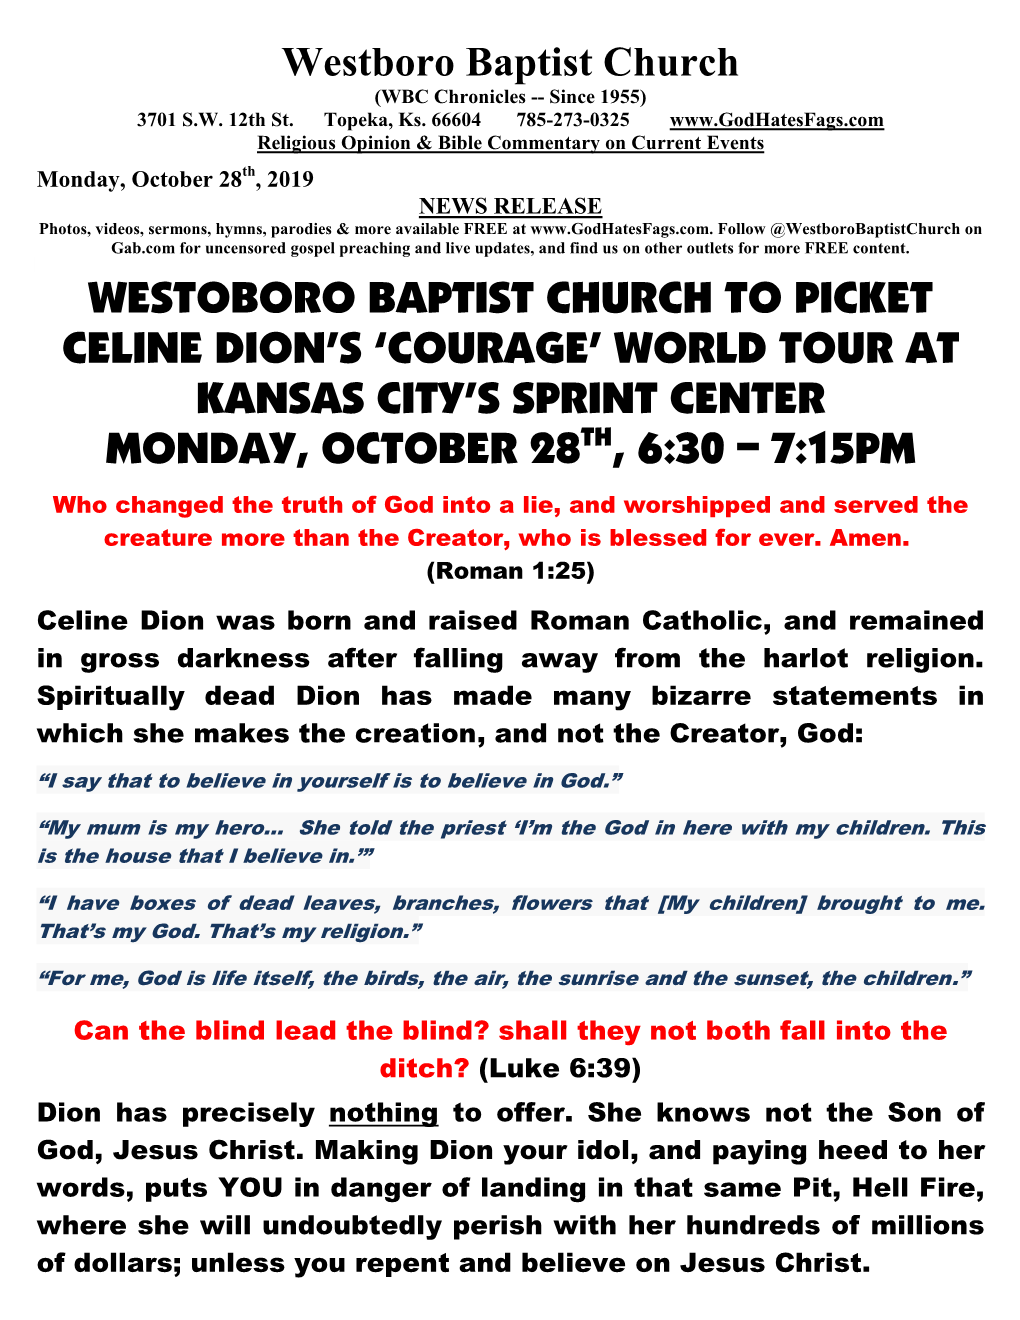 Westoboro Baptist Church to Picket Celine Dion's